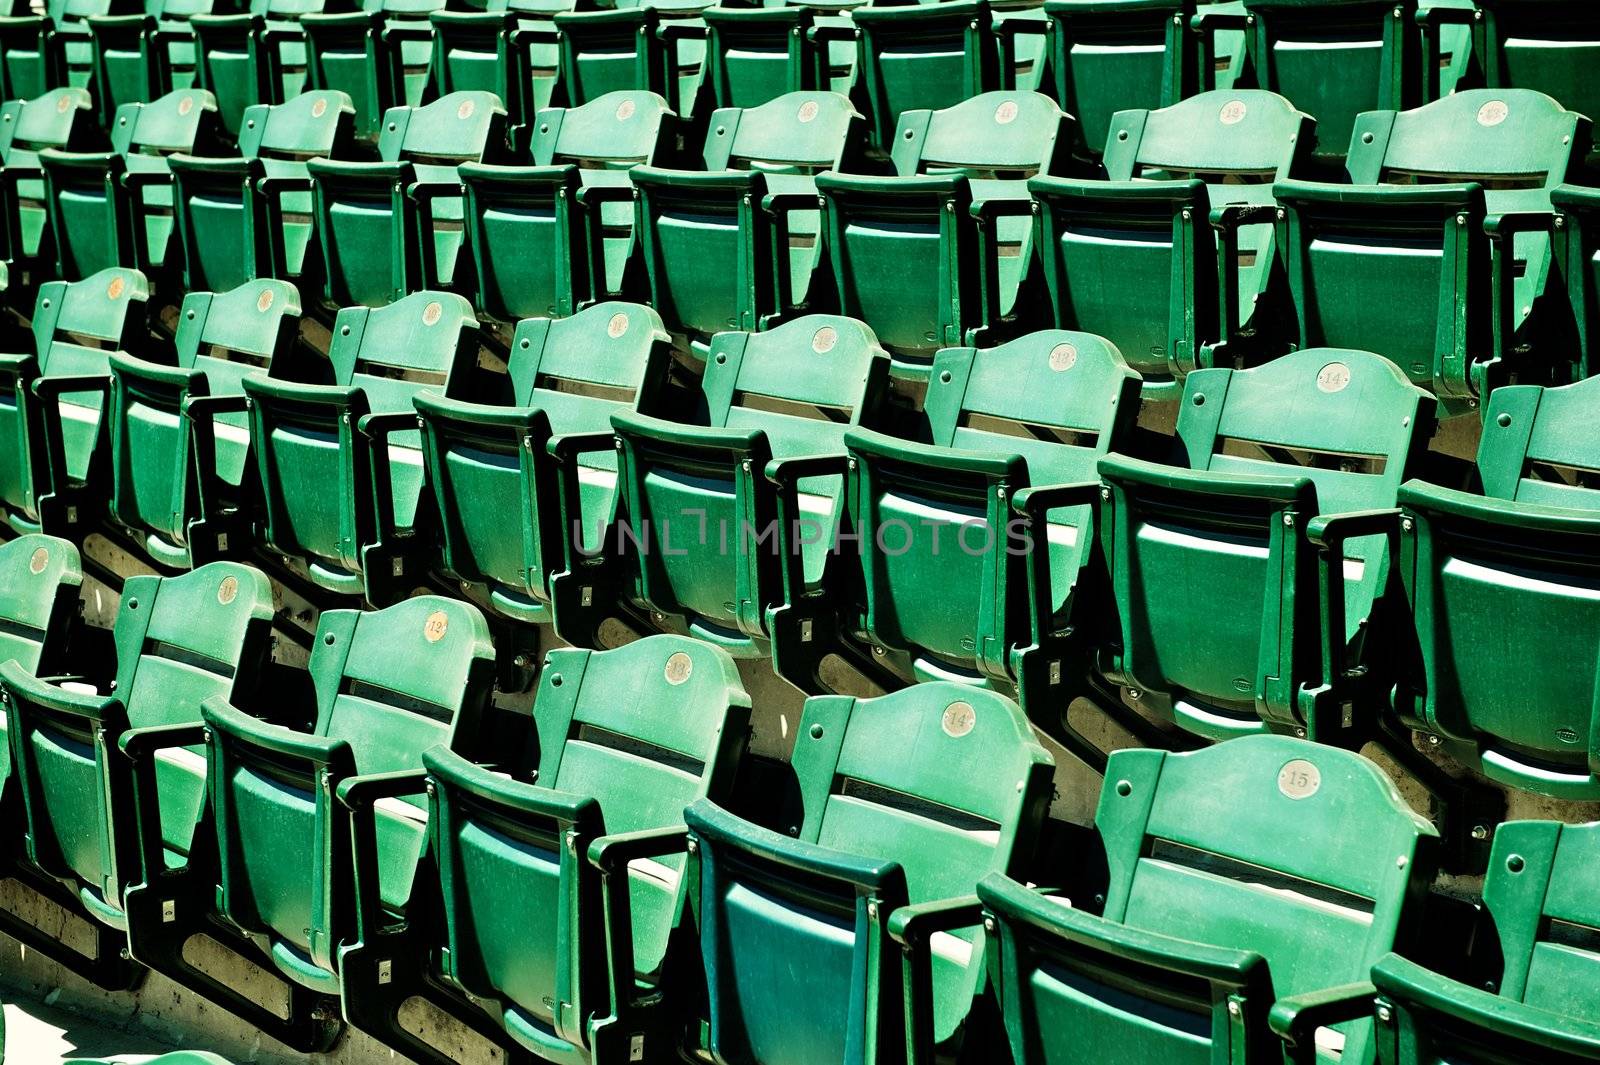 Several rows of green folding seats in a Major League baseball stadium